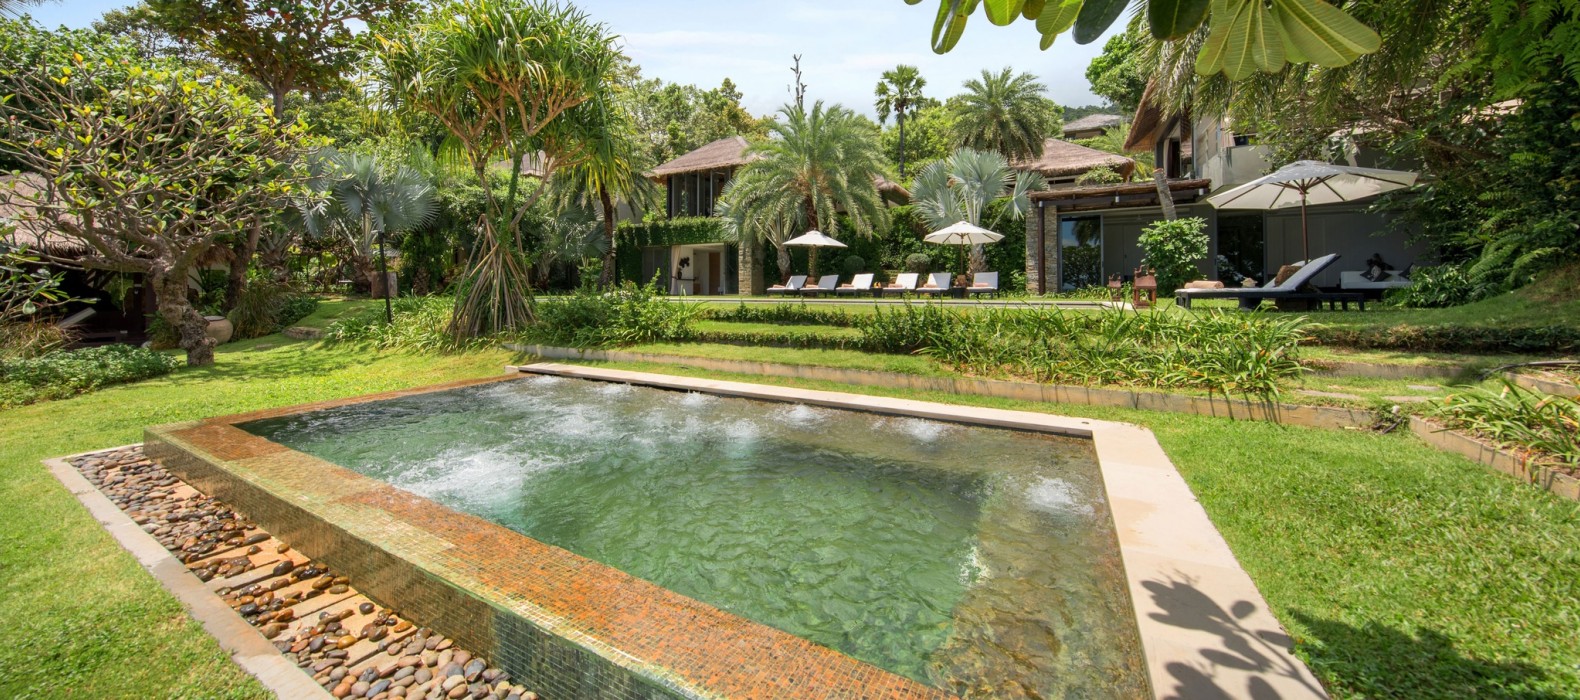 Exterior pool of Villa Sunstream in Koh Samui